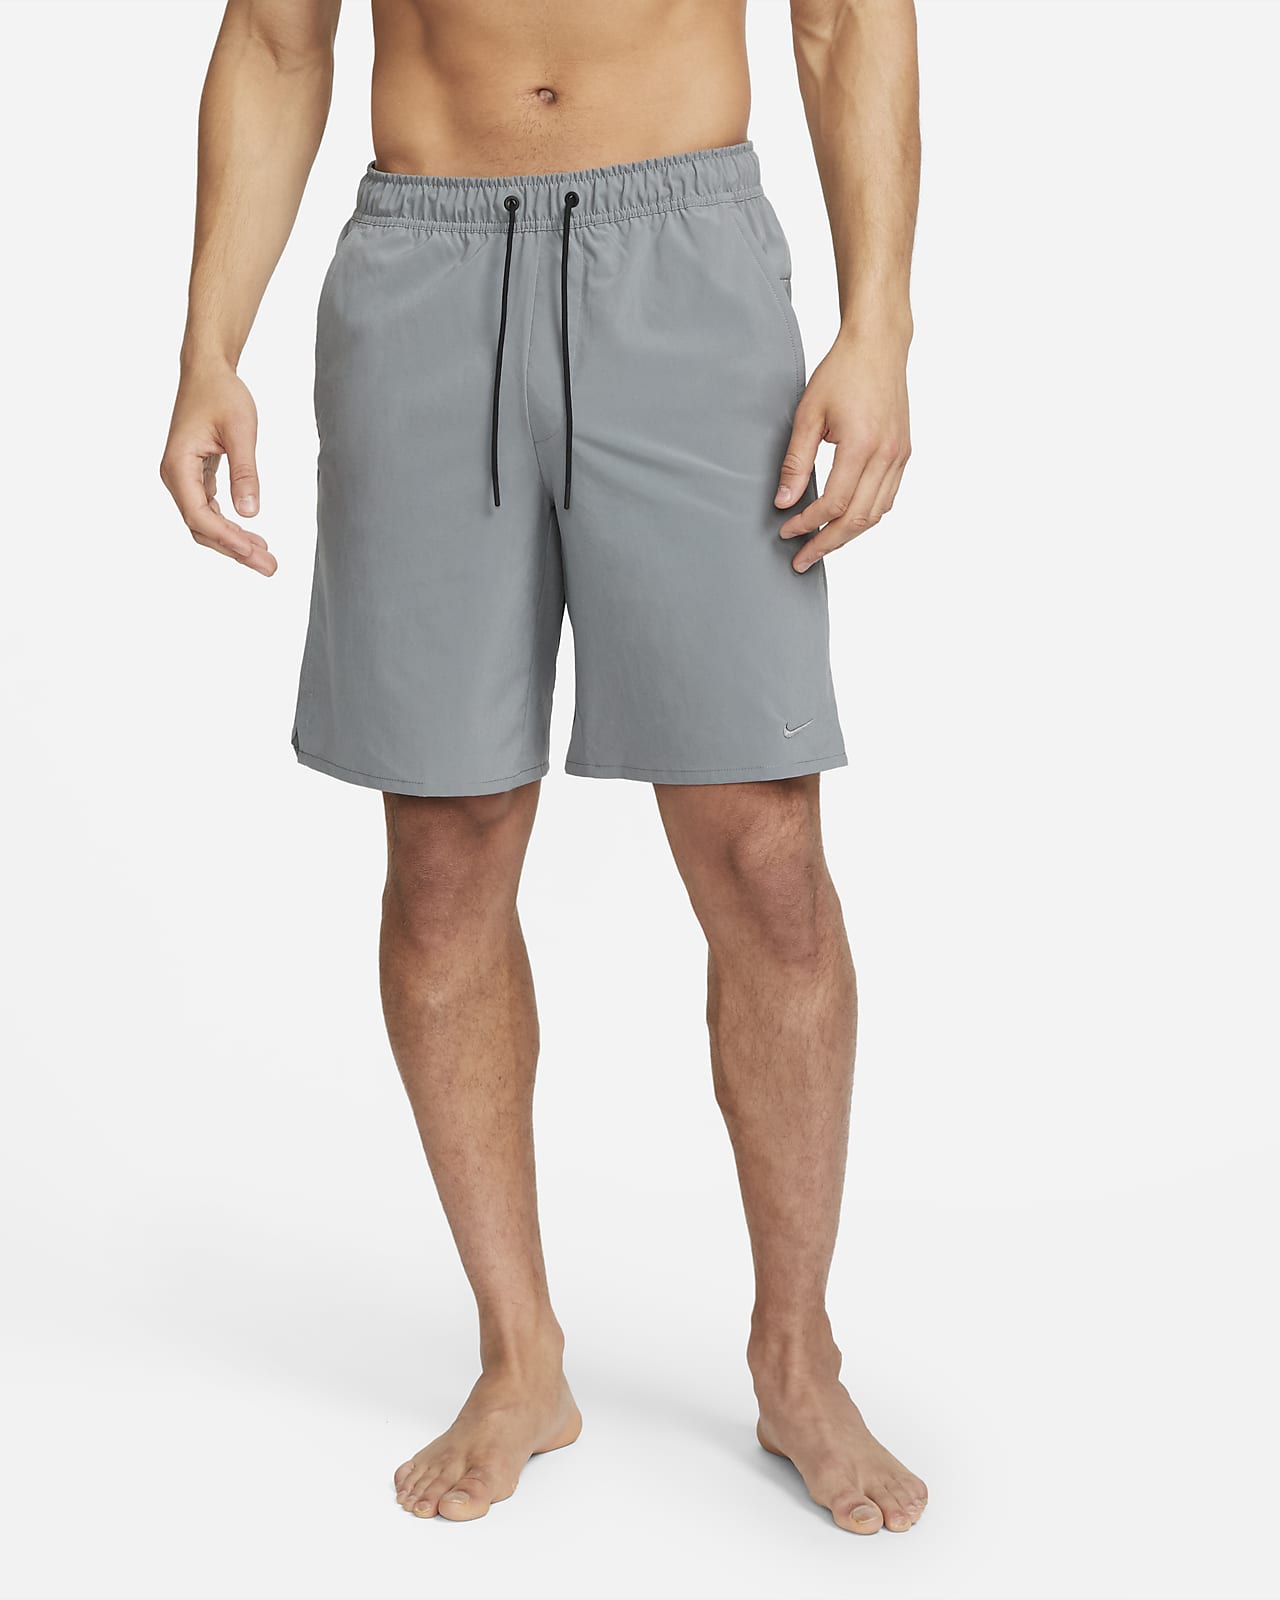 Nike Unlimited Pantalón corto versátil Dri-FIT de 23 cm sin forro - Hombre